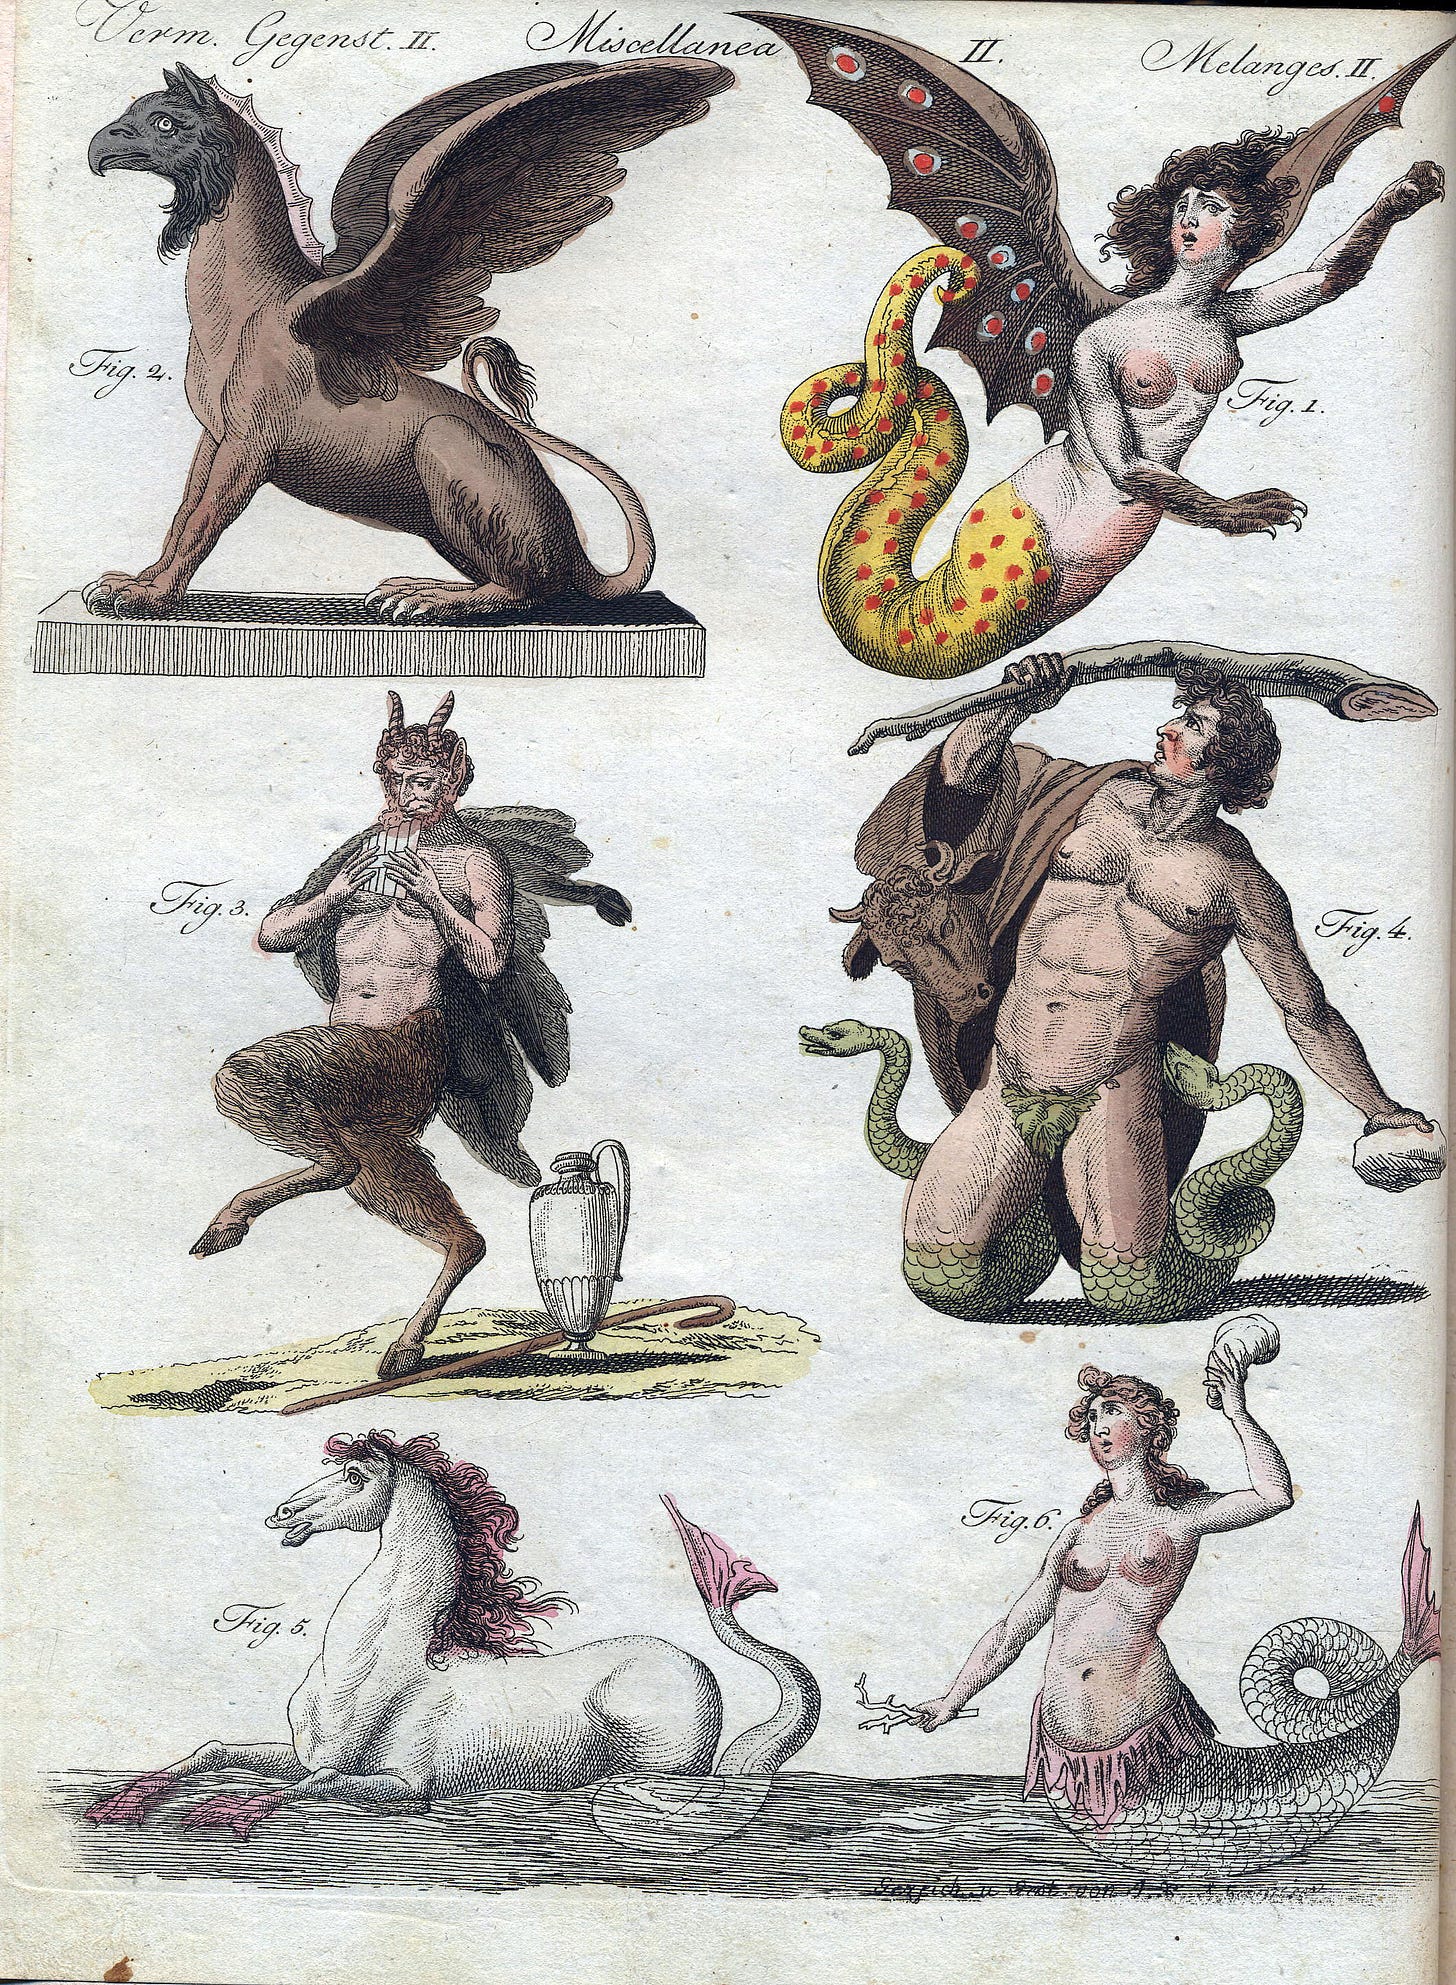 By Friedrich Johann Justin Bertuch (1747-1822) - Eigenbesitz, Public Domain, https://commons.wikimedia.org/w/index.php?curid=940691